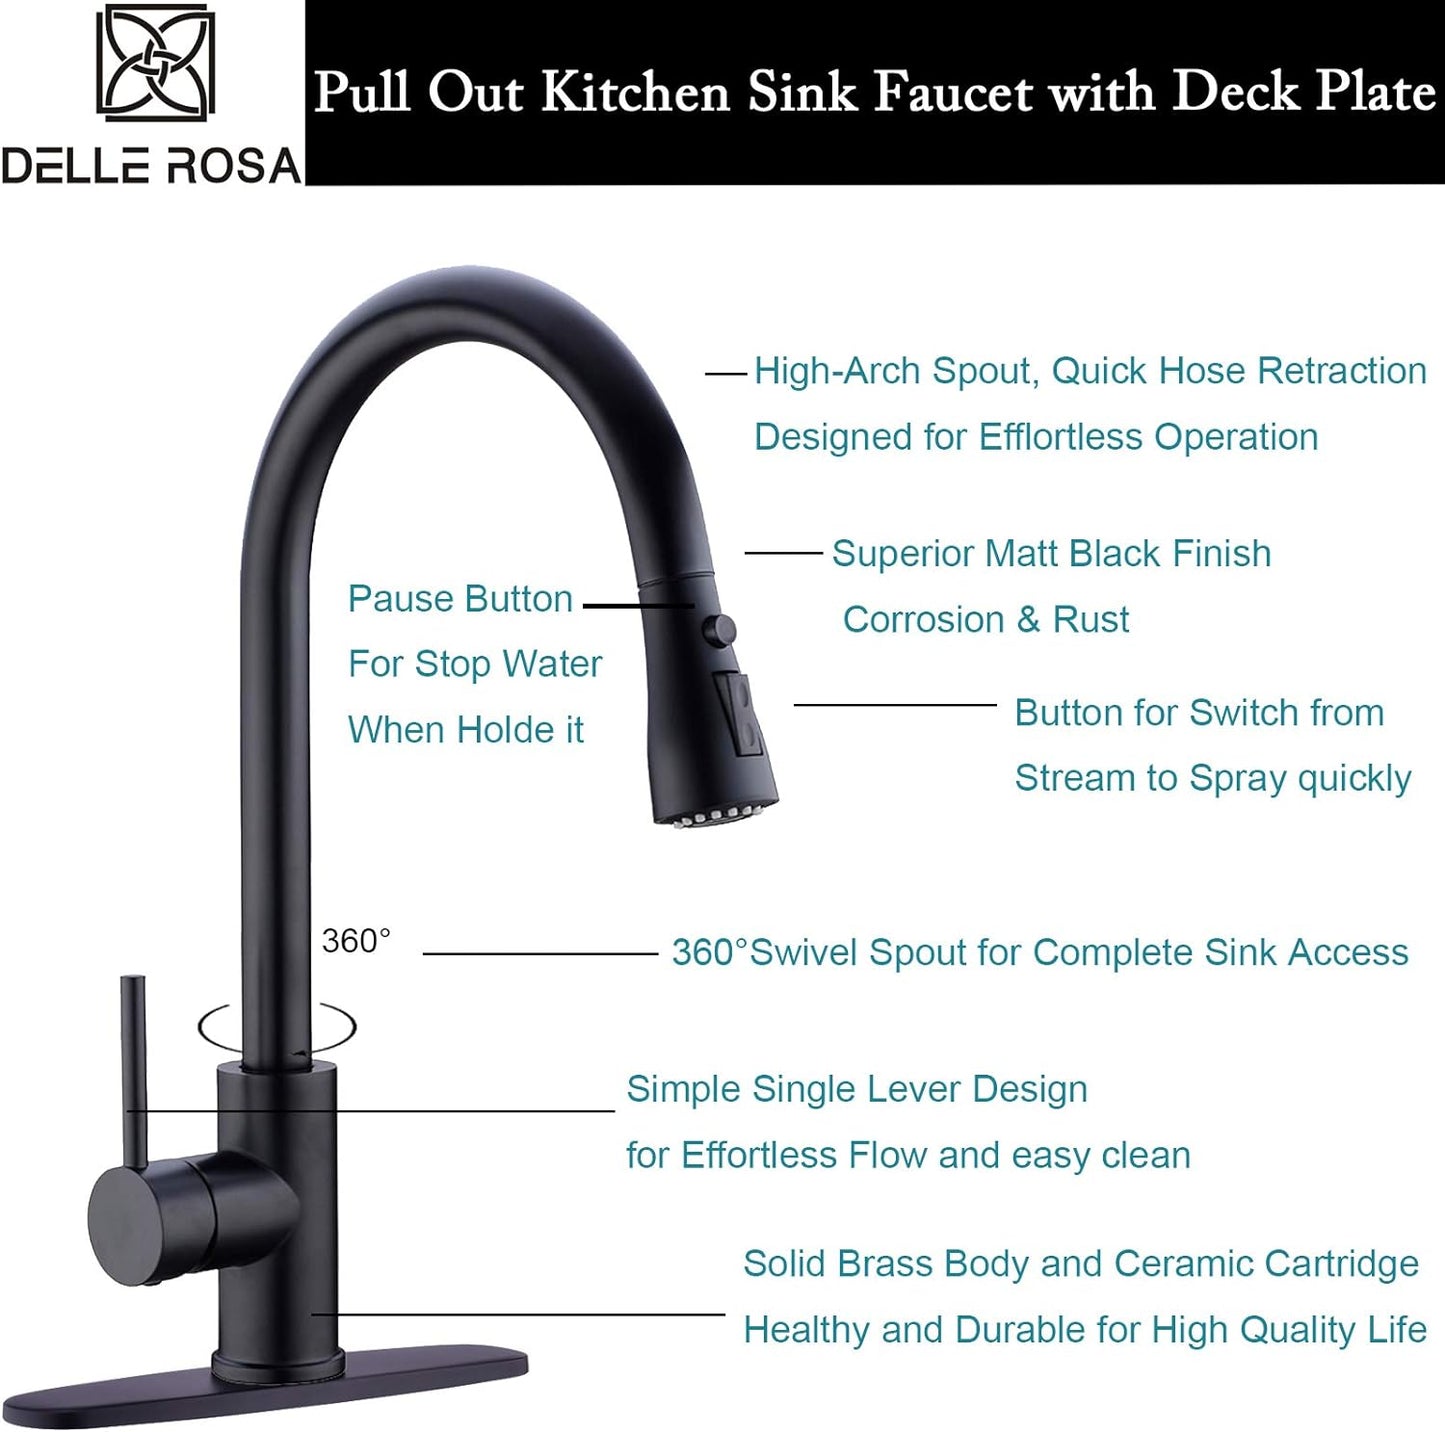 Delle Rosa Kitchen Faucet, Matte Black Kitchen Faucet, Pause Function Pre-Rinse Kitchen Faucet with Pull down Sprayer, Kitchen Faucet with Deck Plate